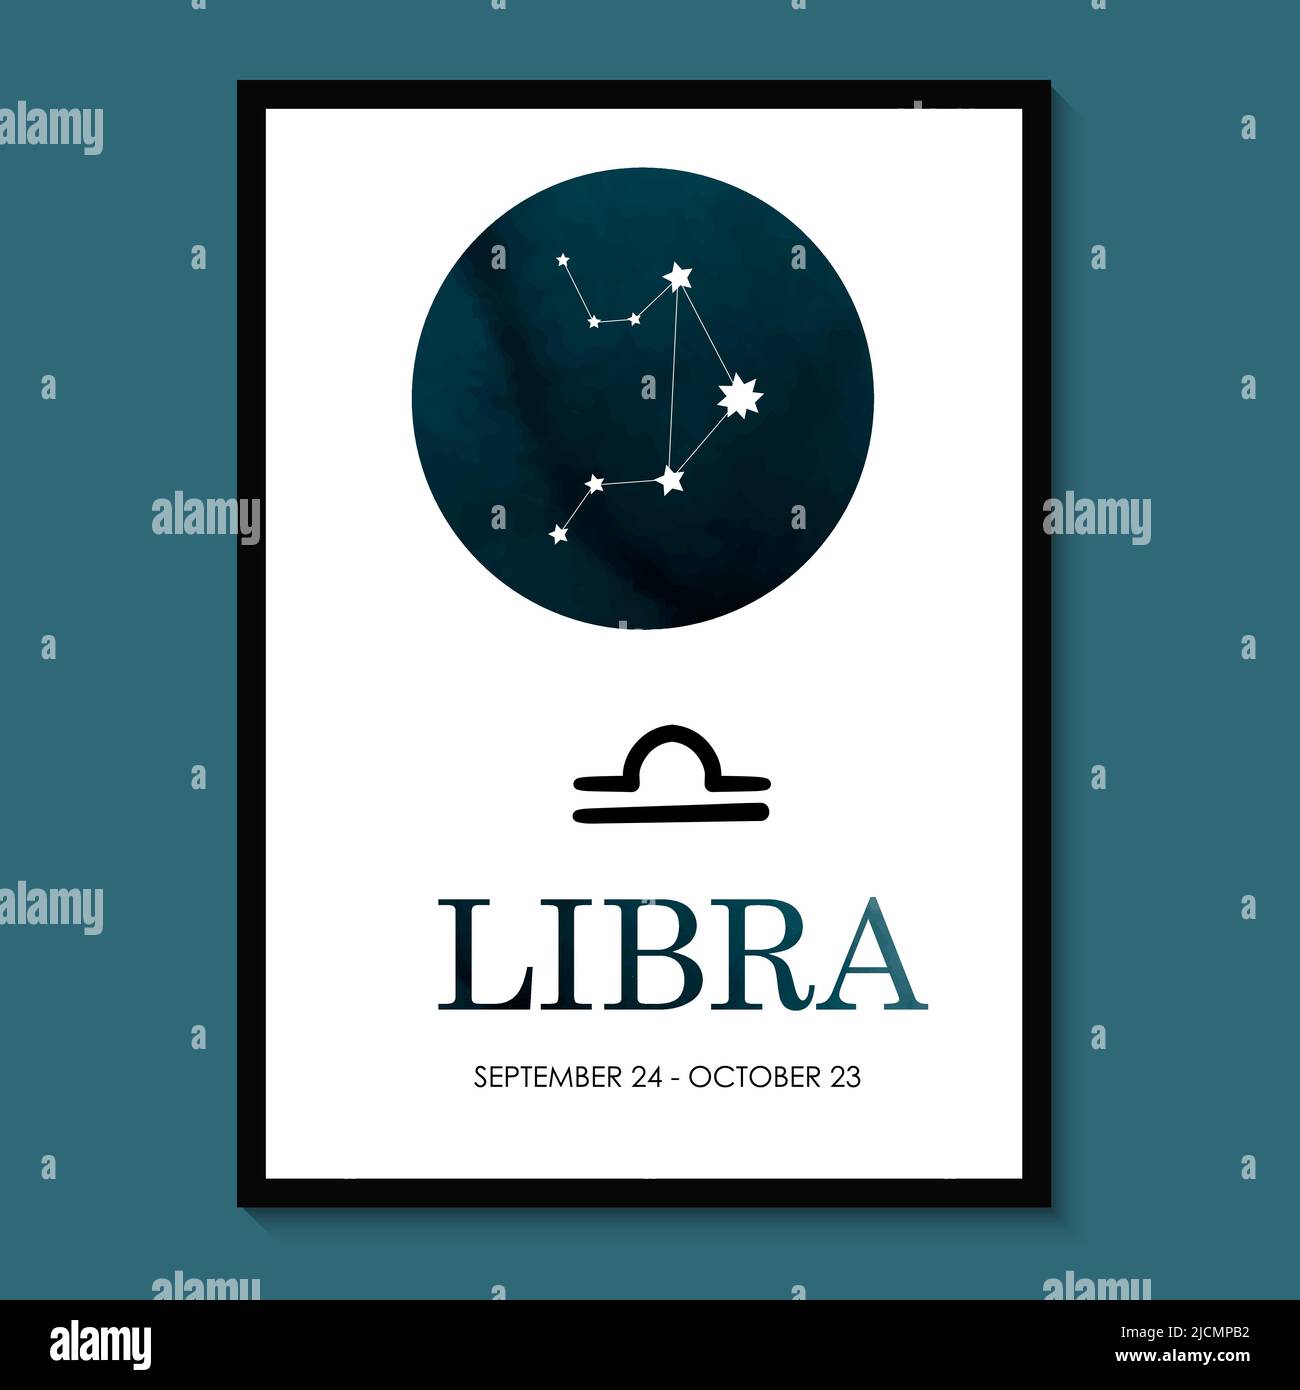 https://c8.alamy.com/comp/2JCMPB2/libra-zodiac-libra-zodiac-icon-libra-constellation-astrology-vector-illustration-astrology-illustration-2JCMPB2.jpg